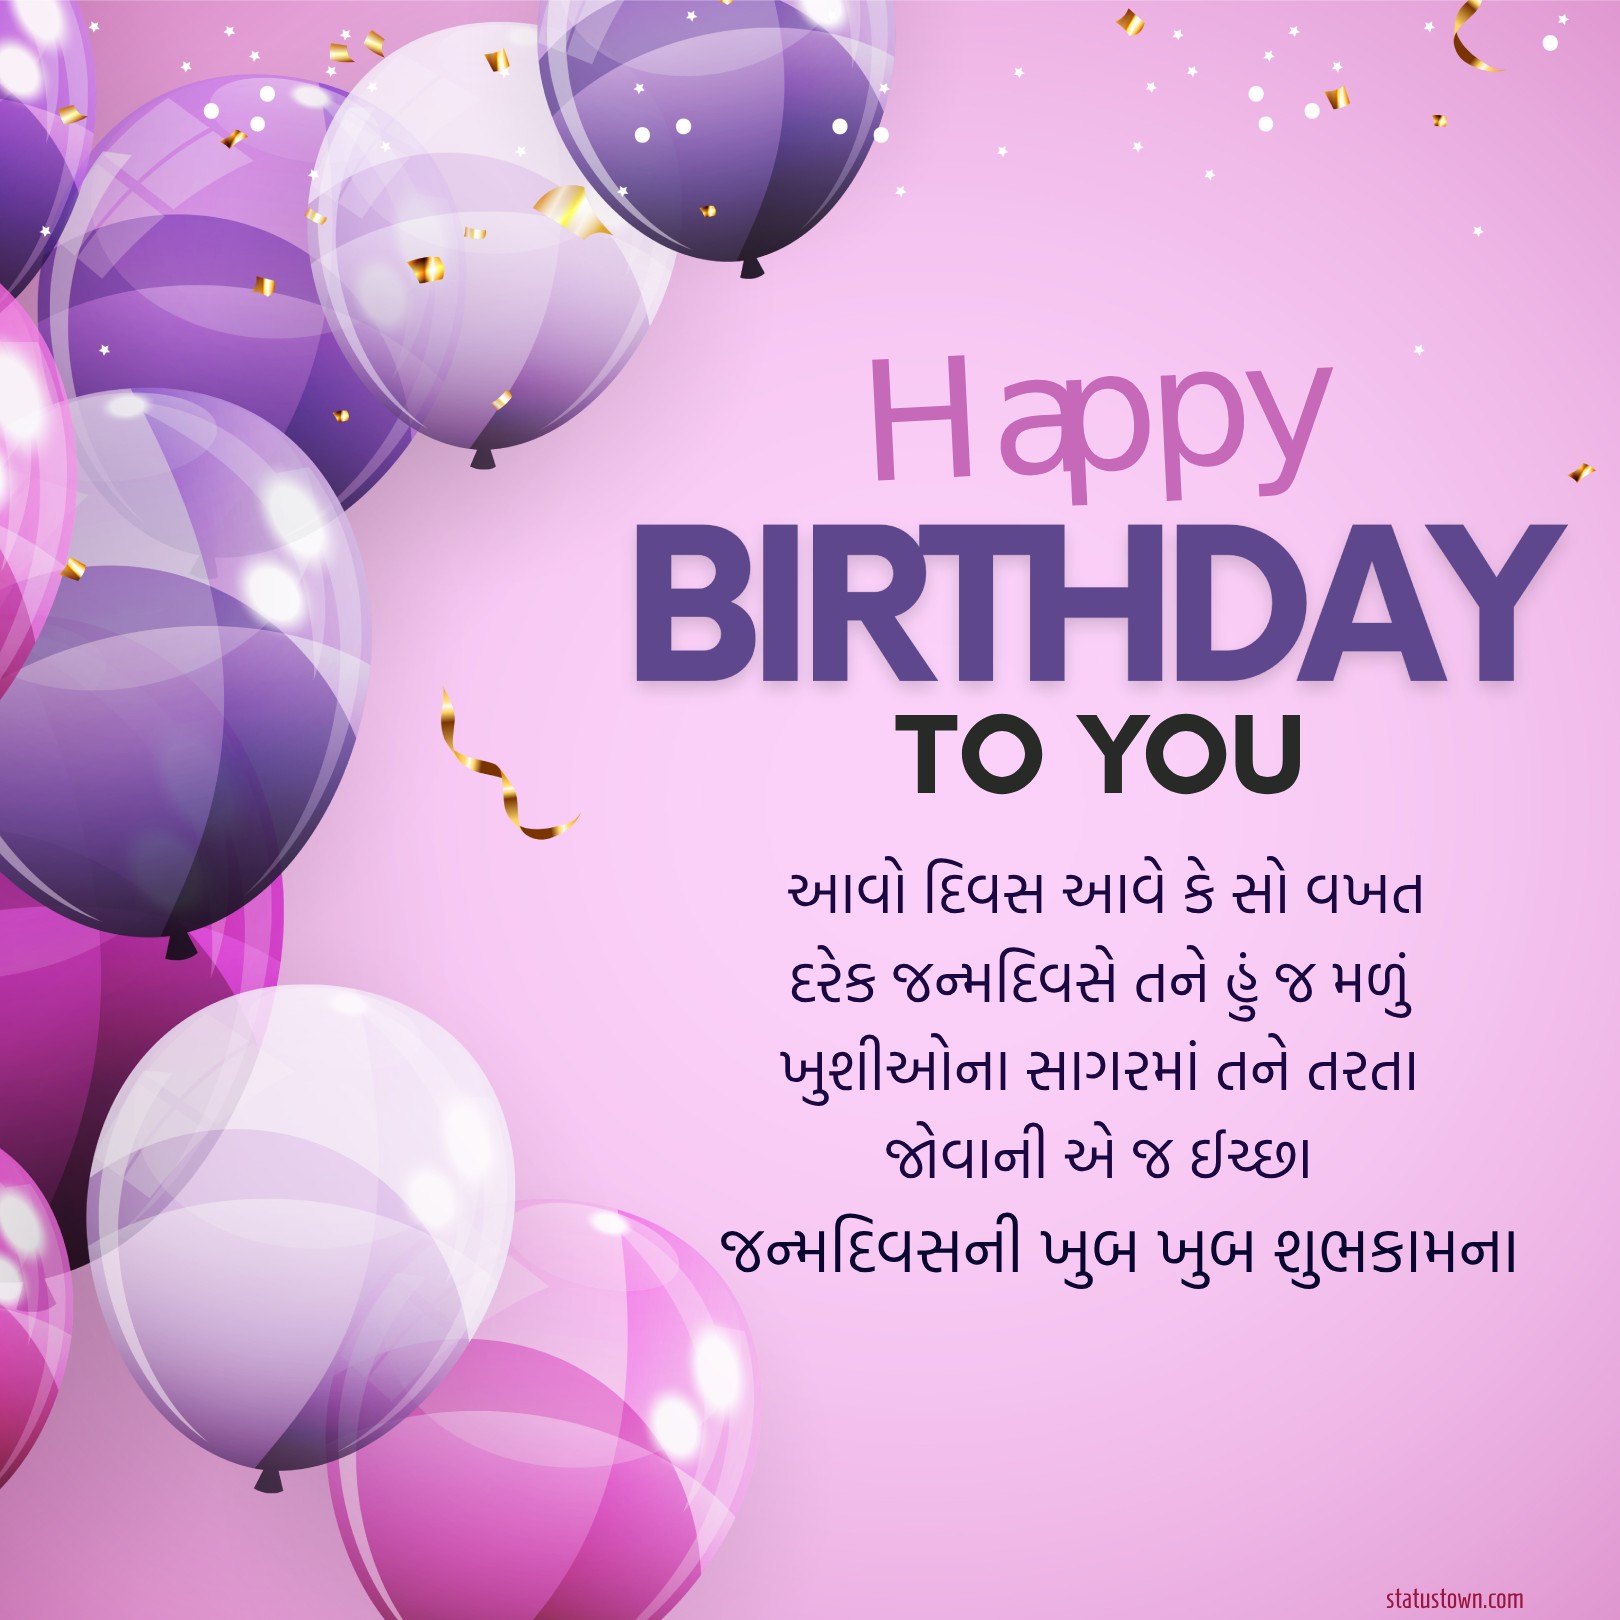 Best birthday wishes for boyfriend in gujarati